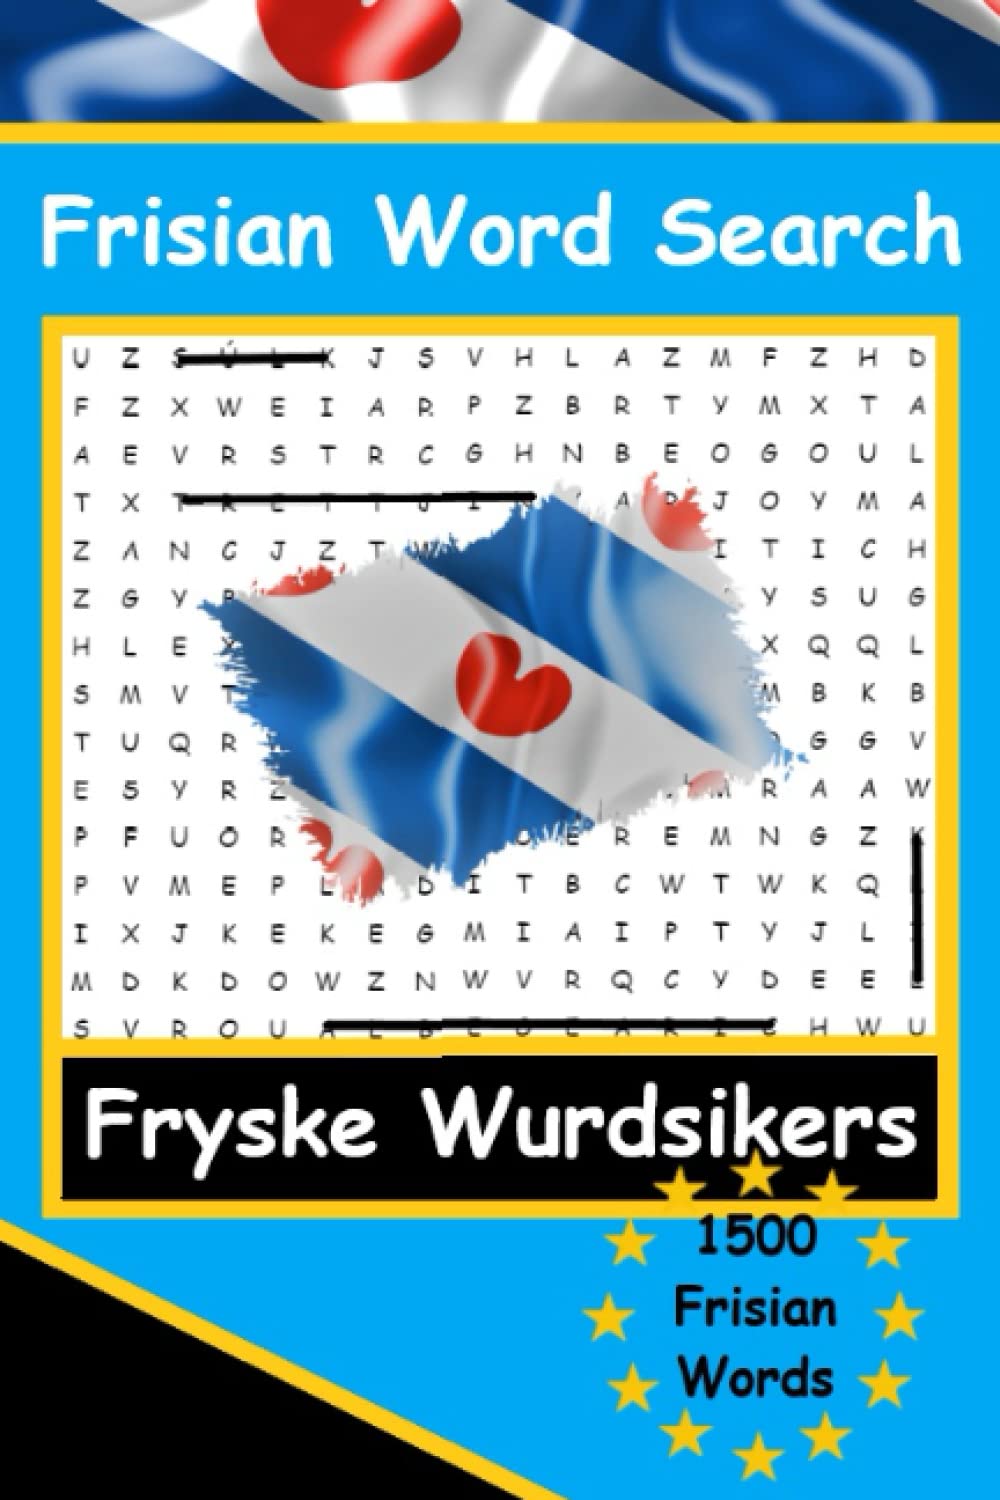 Frisian Word Search Puzzles | Fryske Wurdsikers | A fun way to learn Frisian